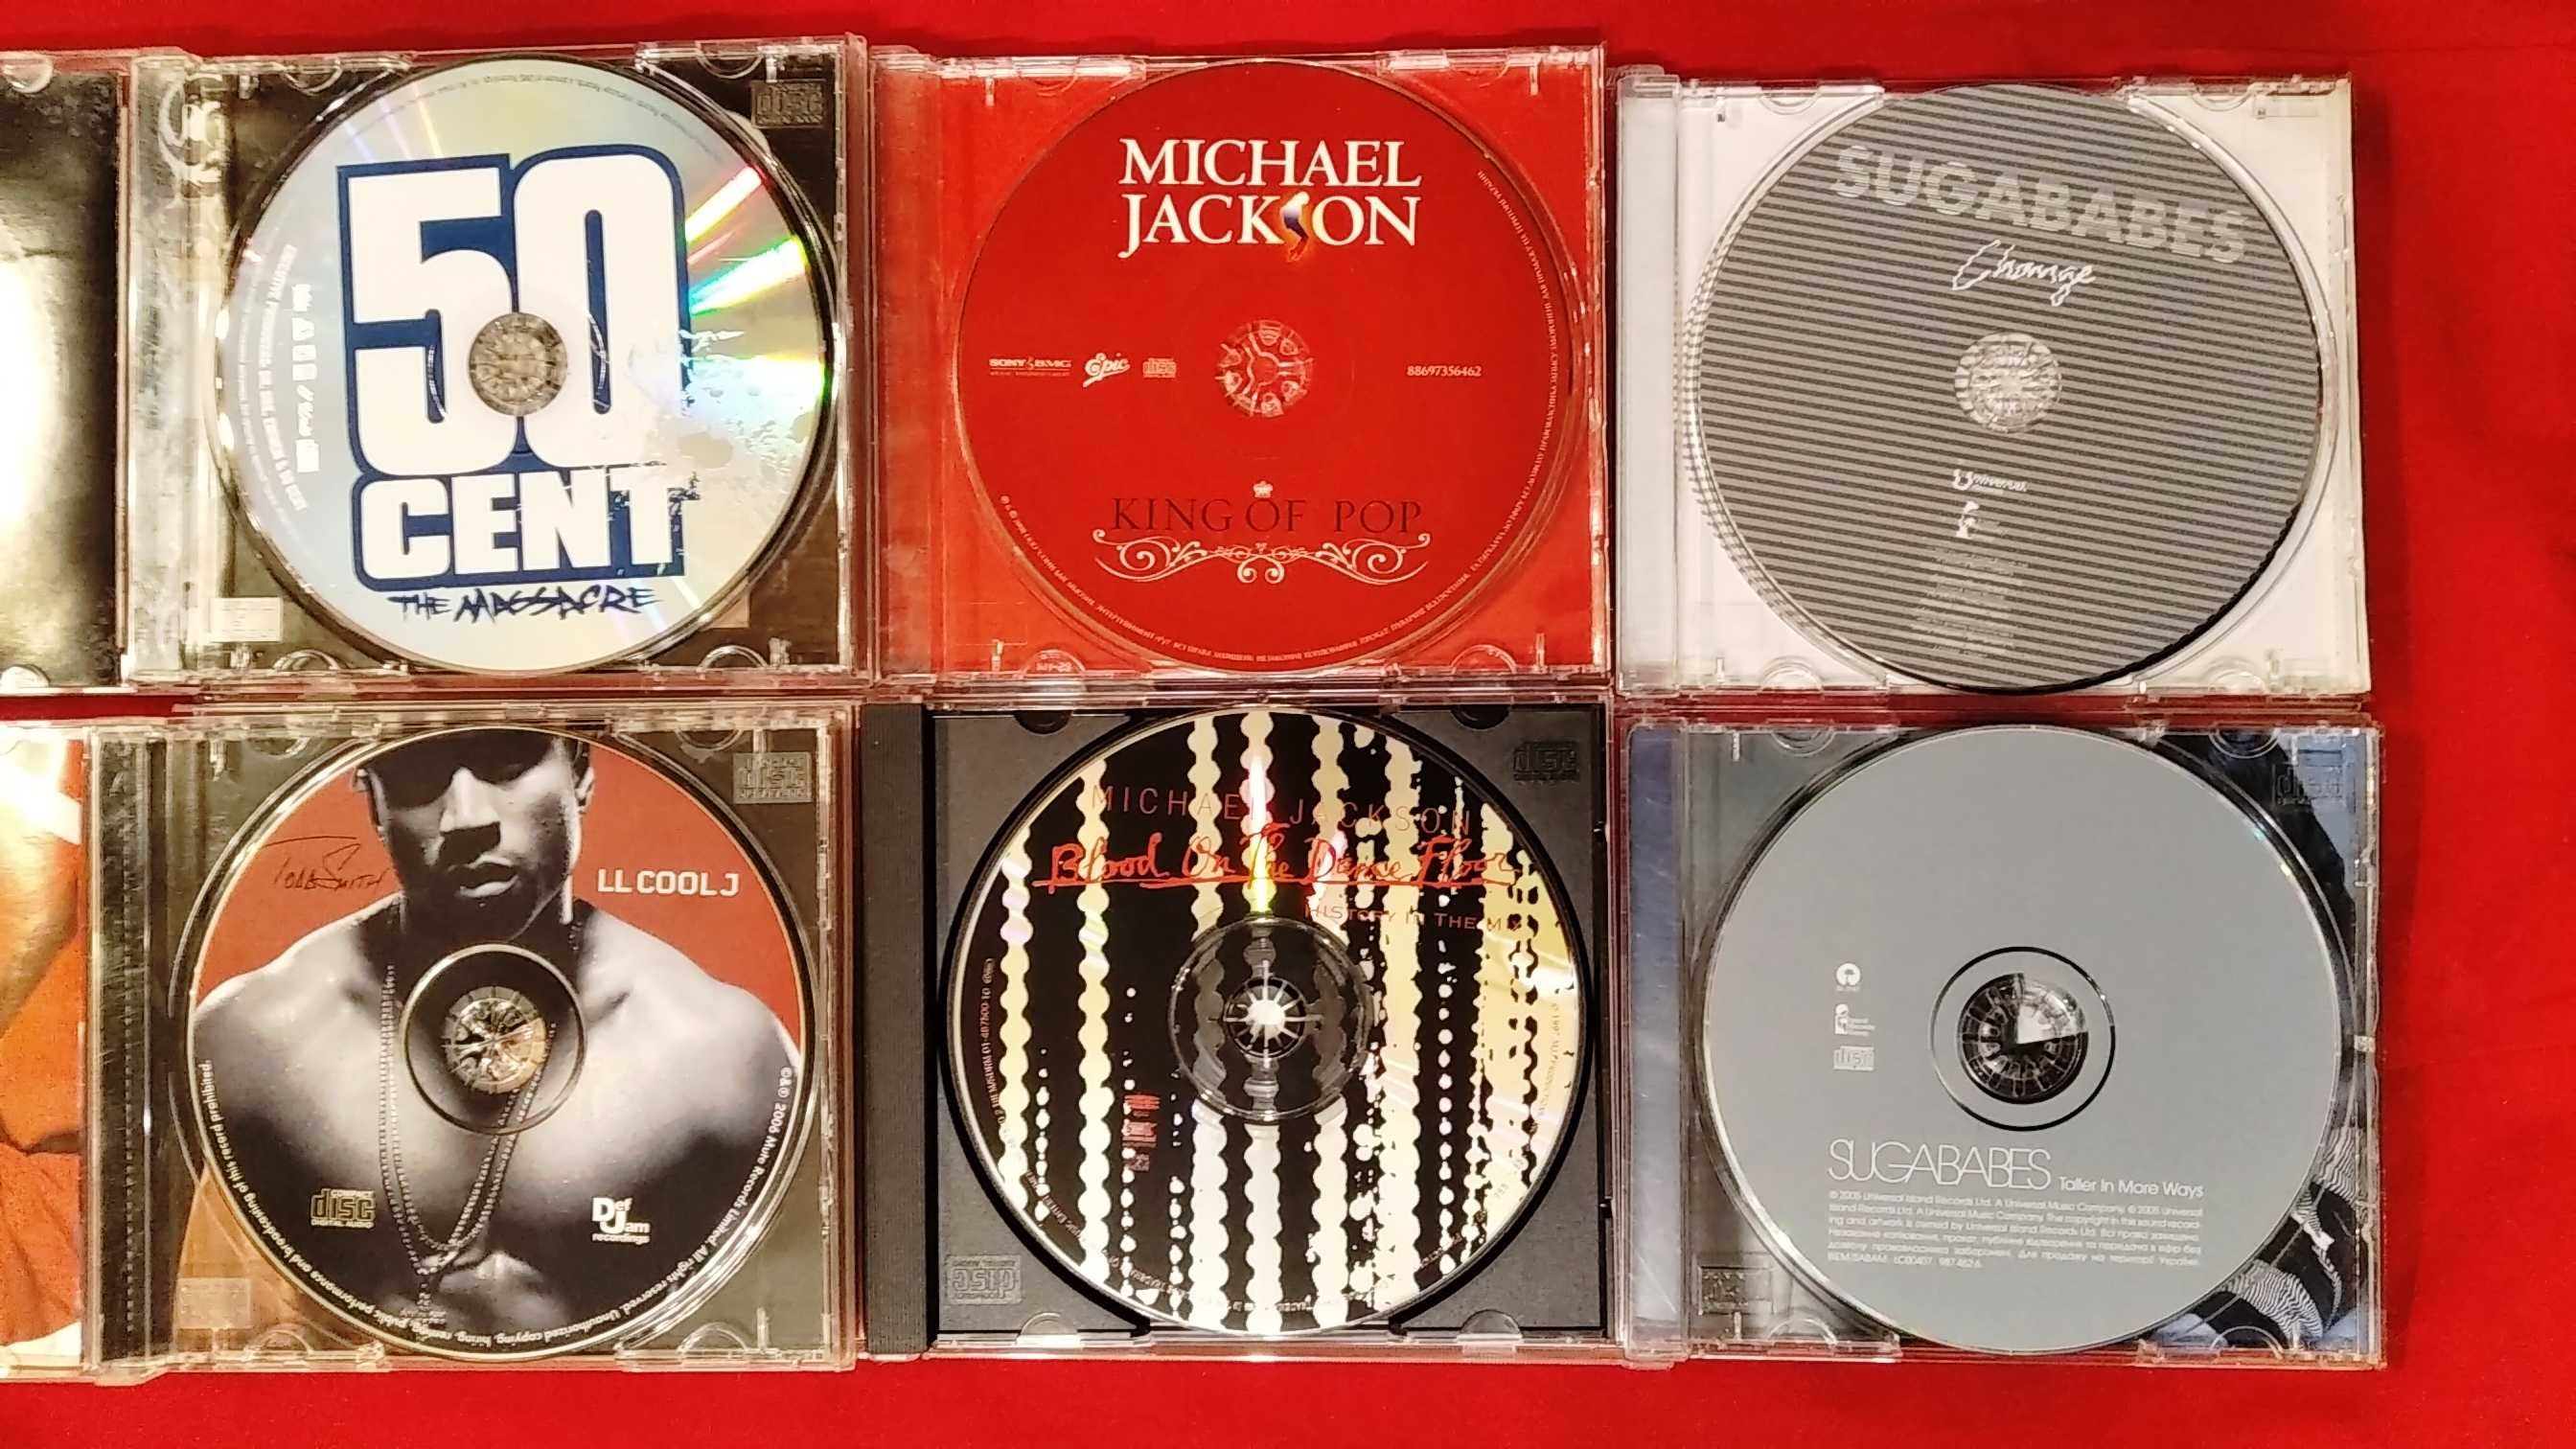 CD - M.Jackson,50 cent, LL Cool J, Suggababes